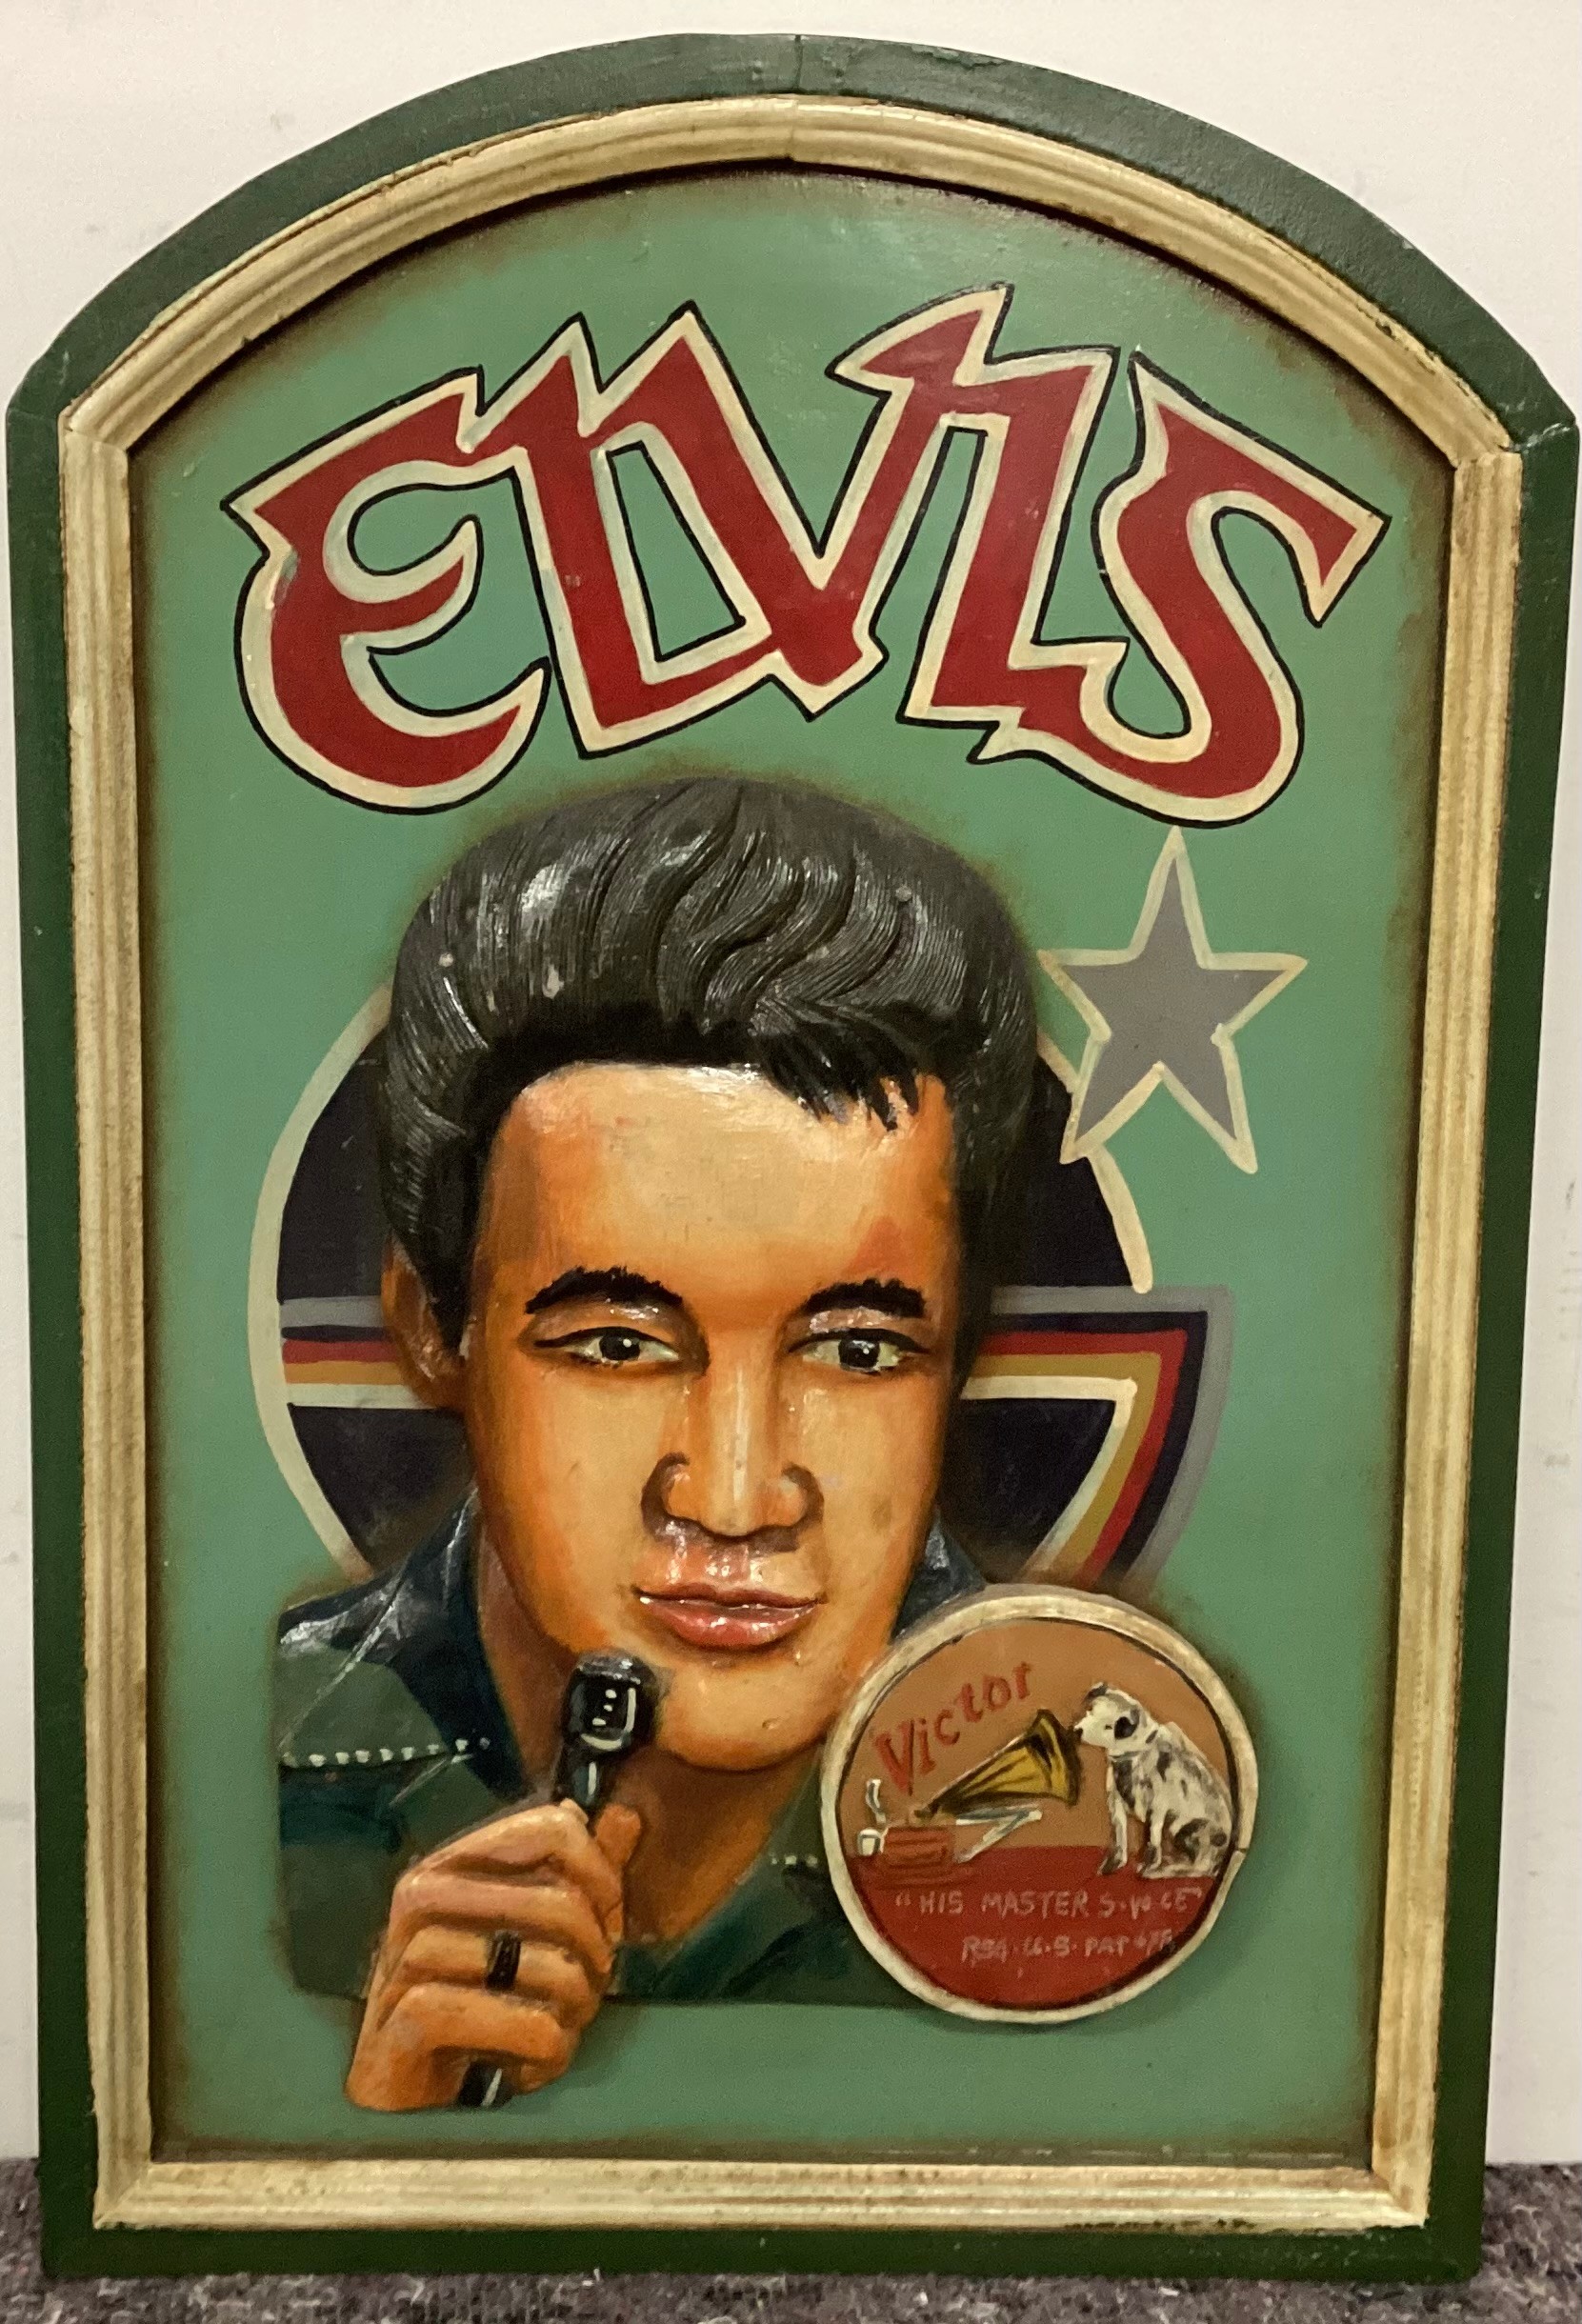 ELVIS PRESLEY WOODEN WALL HANGING DISPLAY. Vintage carved wall plaque depicting Elvis Presley. 40